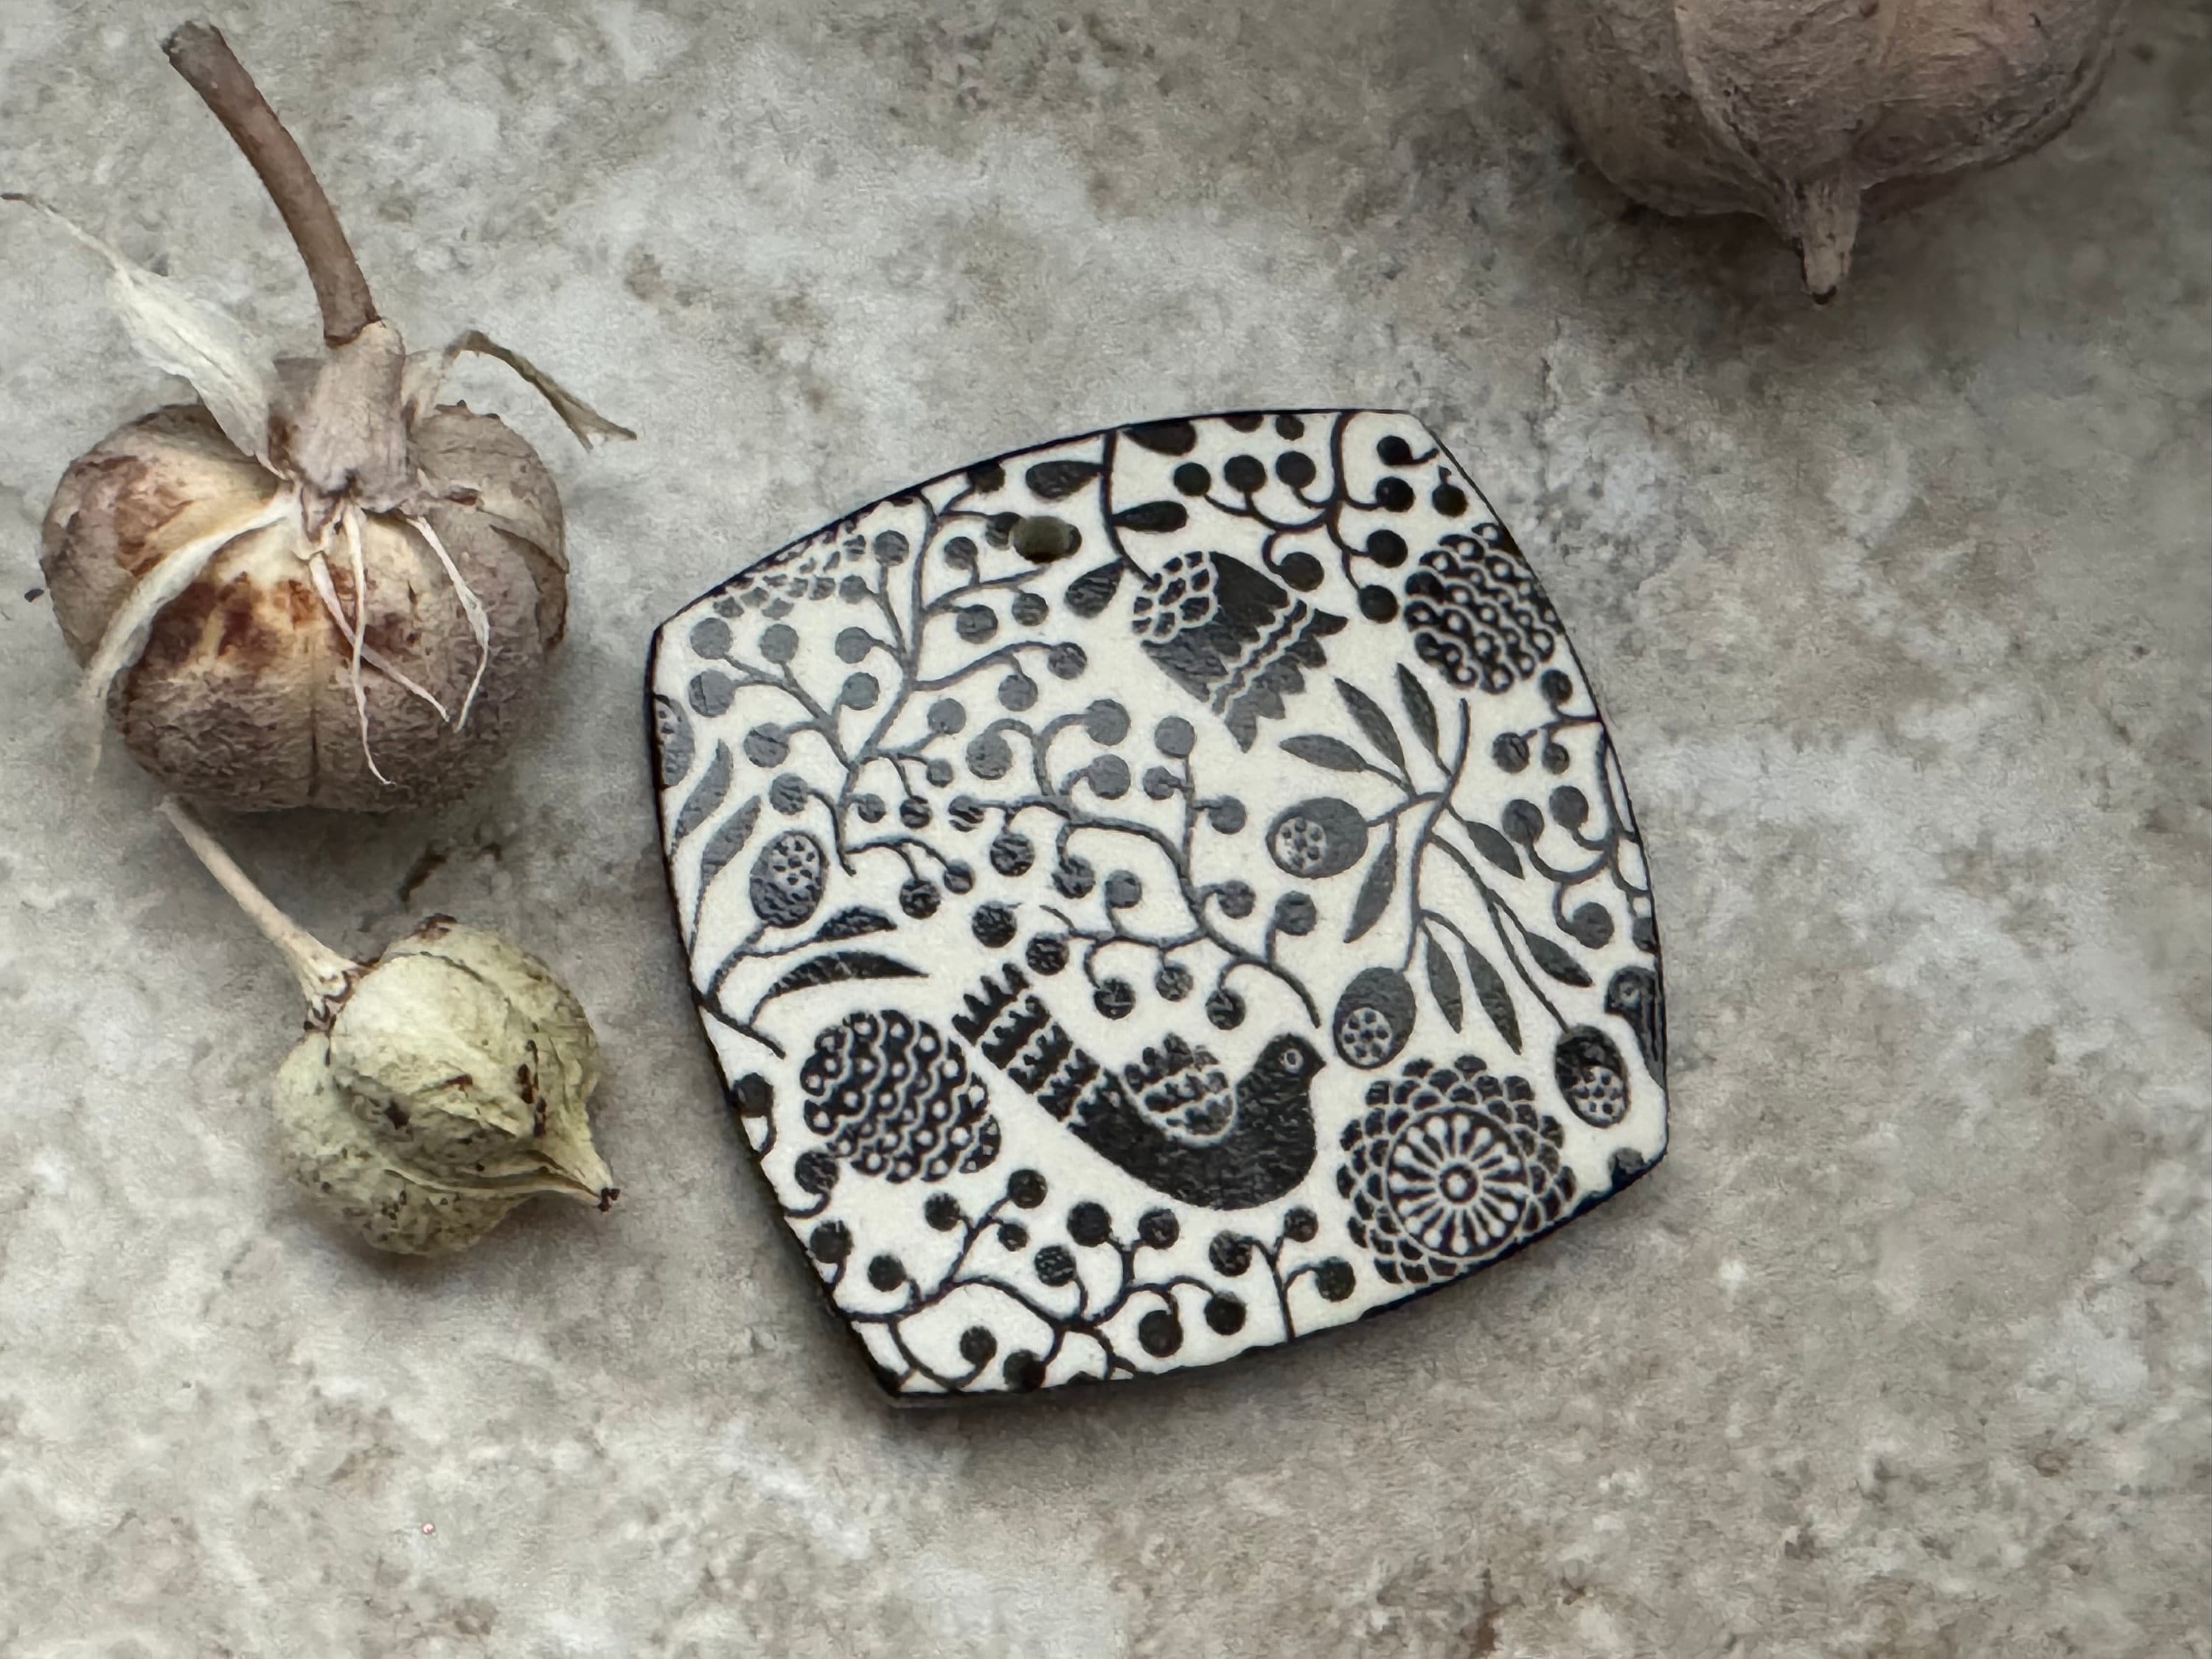 Scandinavian Bird Pendant and Charm, Black and White Pendant, Obtuse Square, Porcelain Ceramic Pendant, Jewelry Making Components